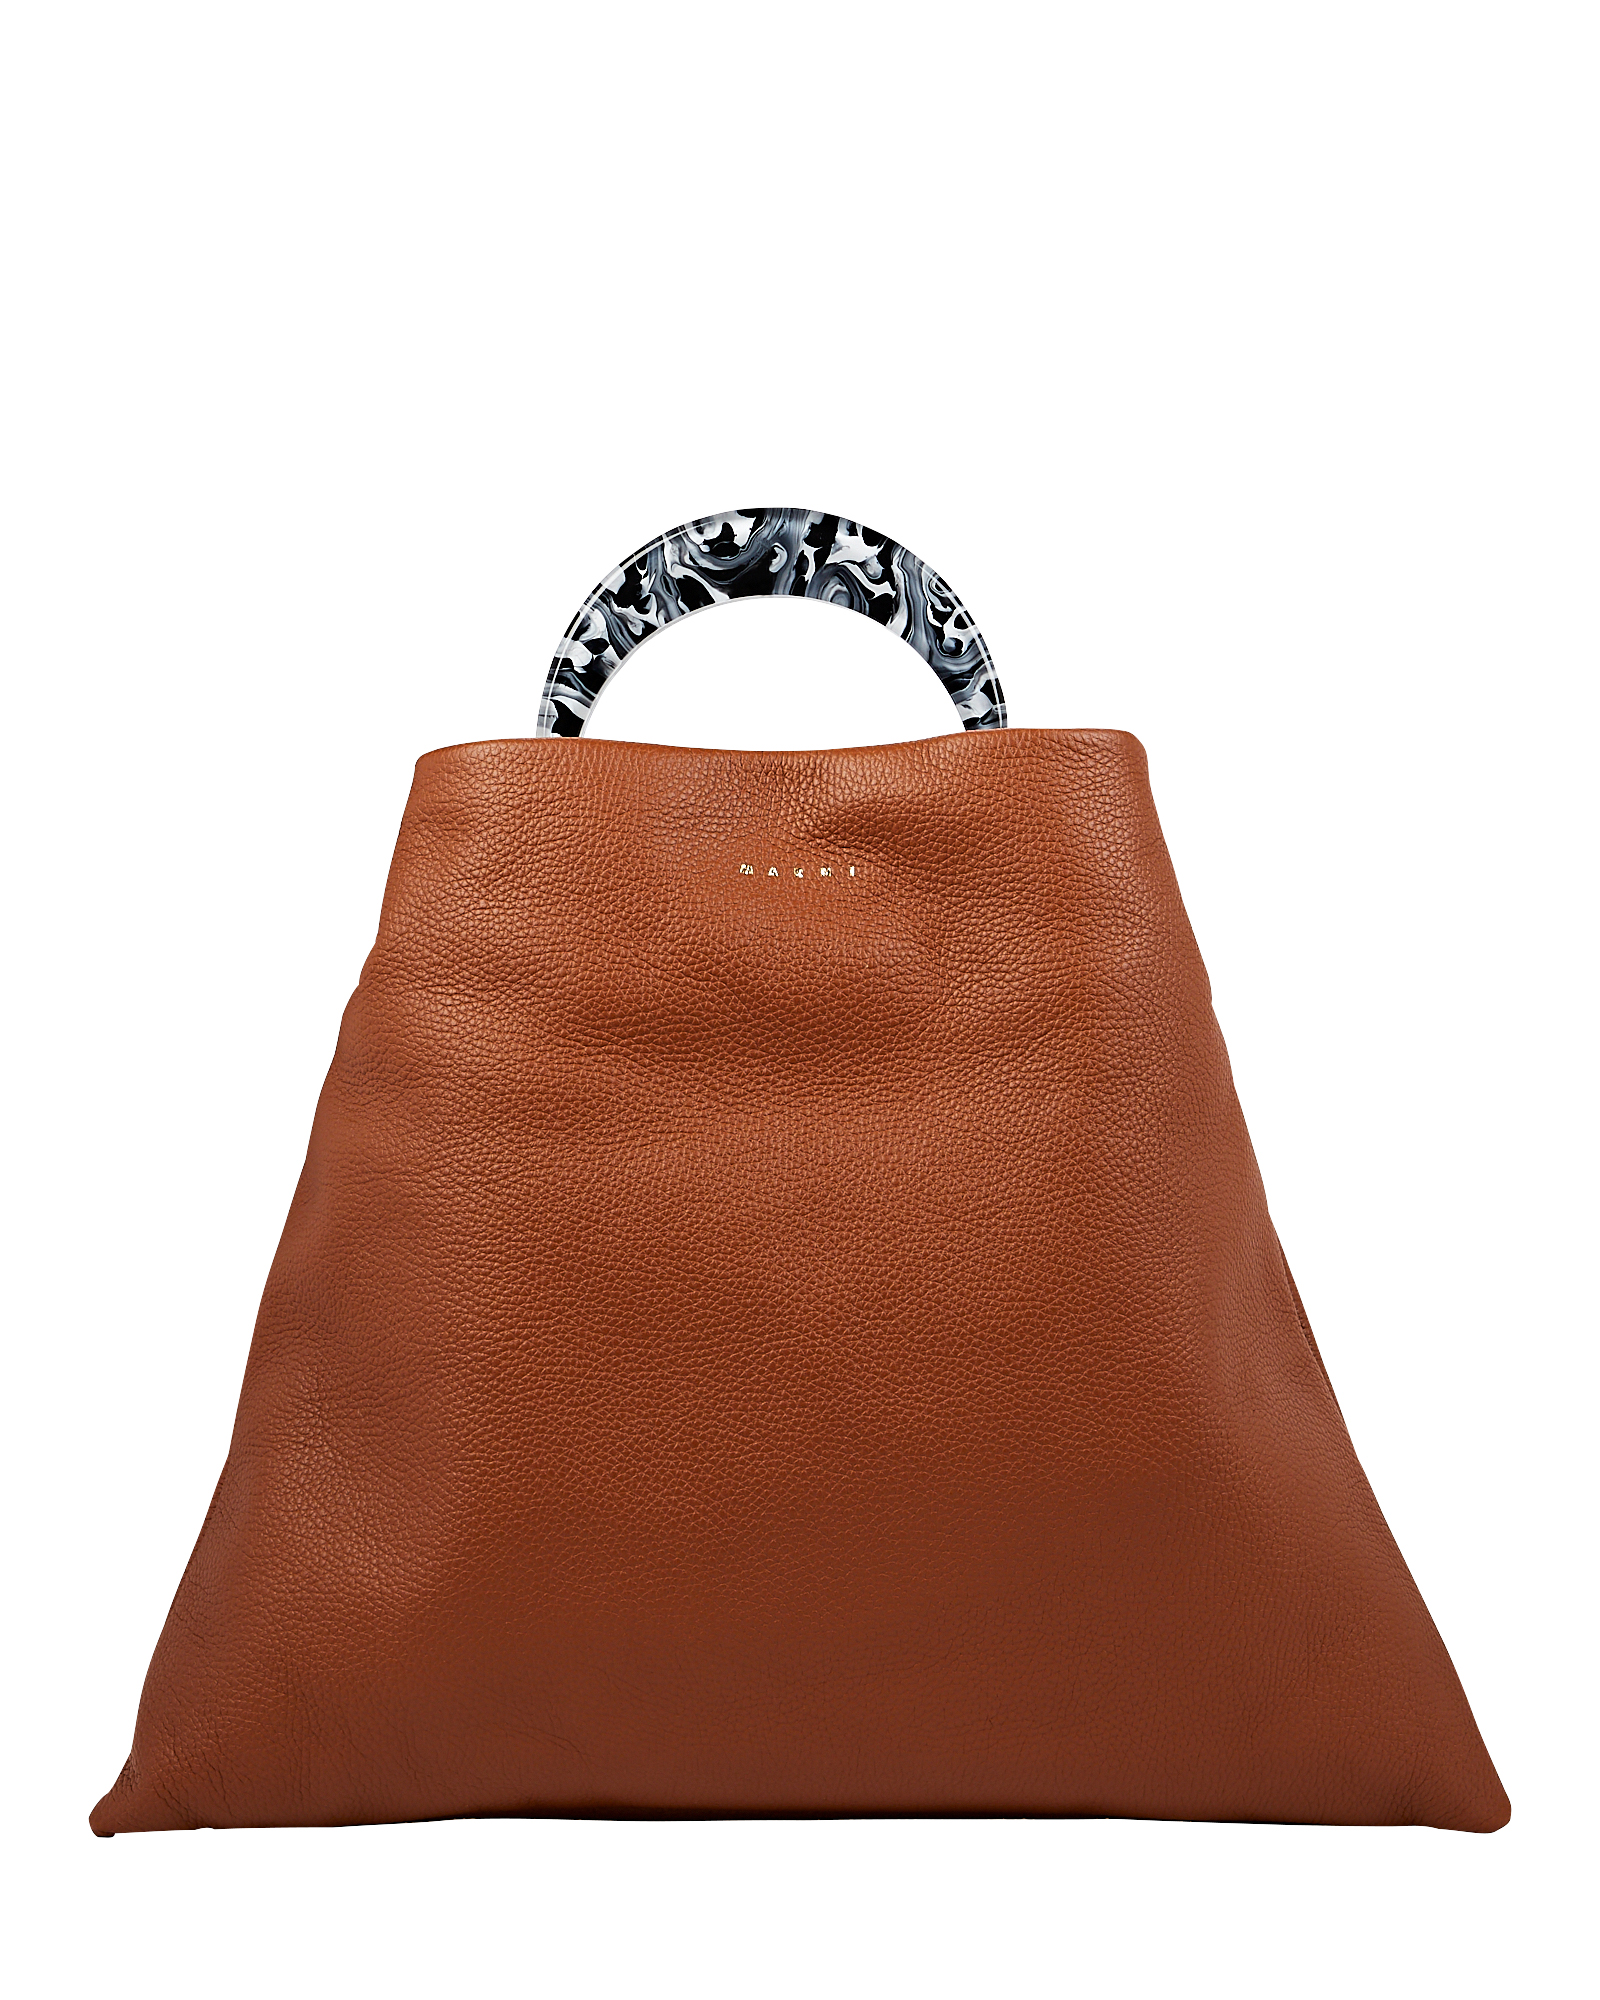 Marni Venice Leather Shoulder Bag In Brown | INTERMIX®